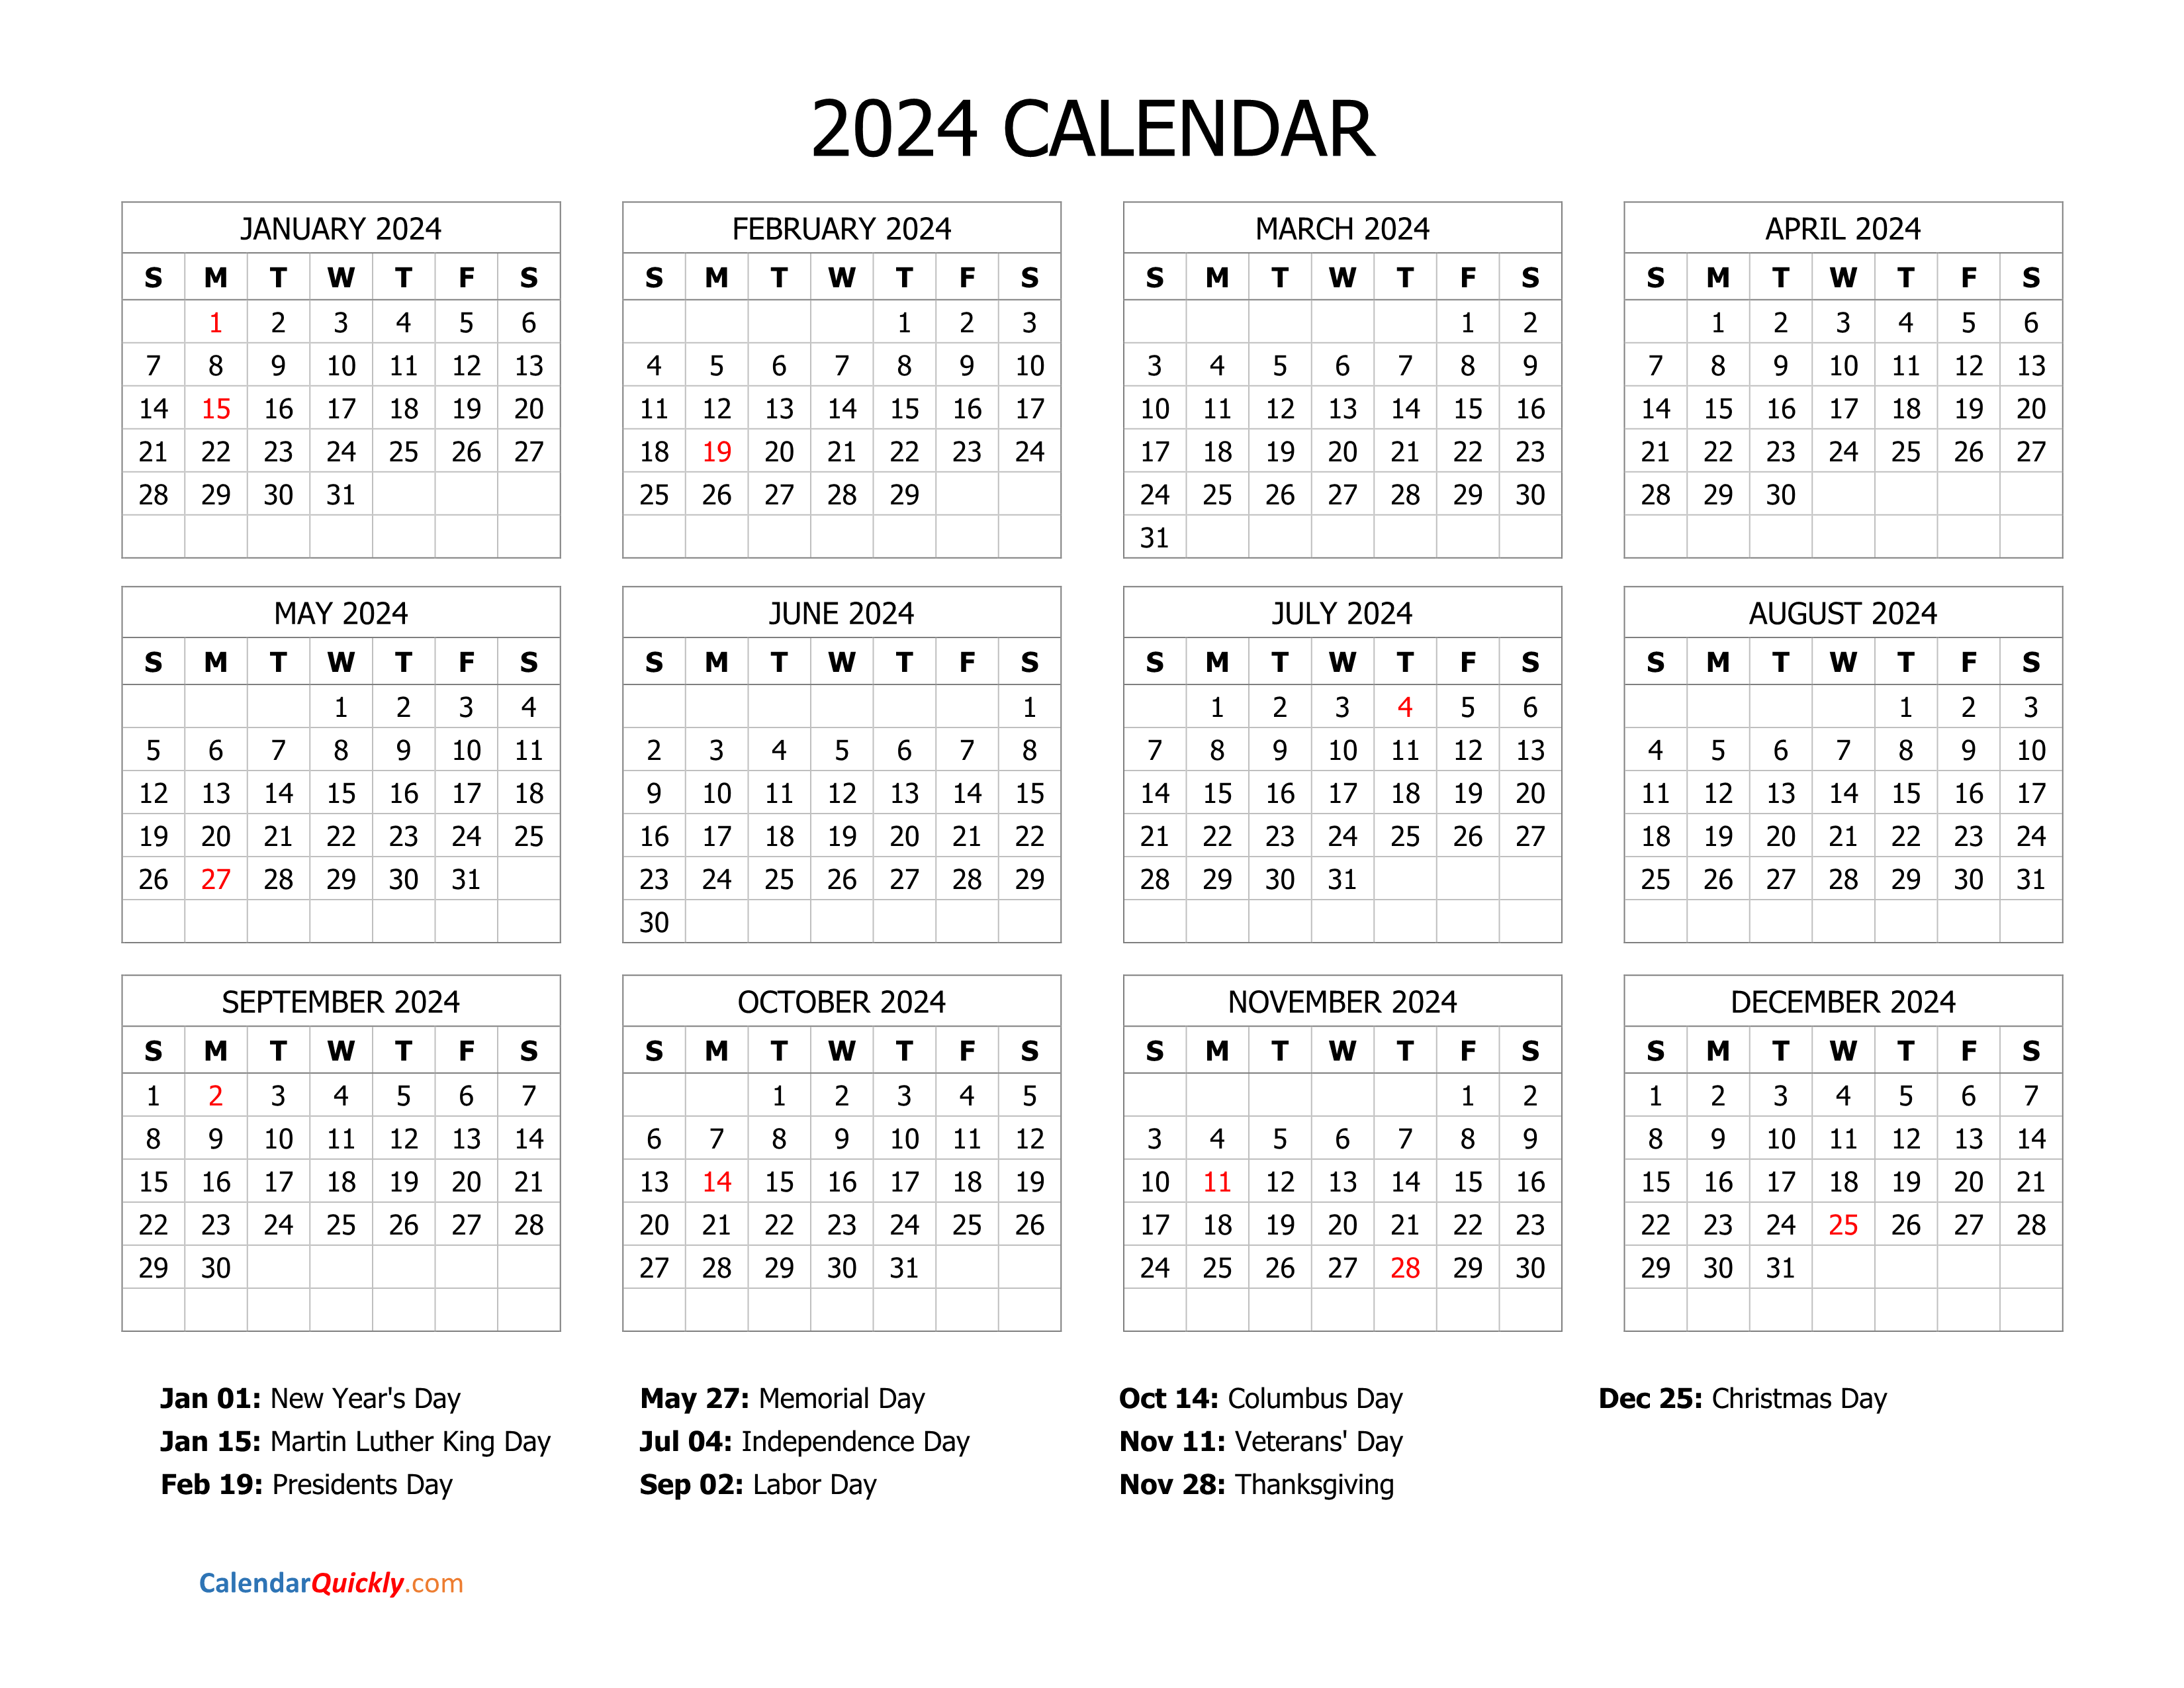 Printable Calendar 2024 With Holidays - Free Printable 2024 Calendar October 24calendars